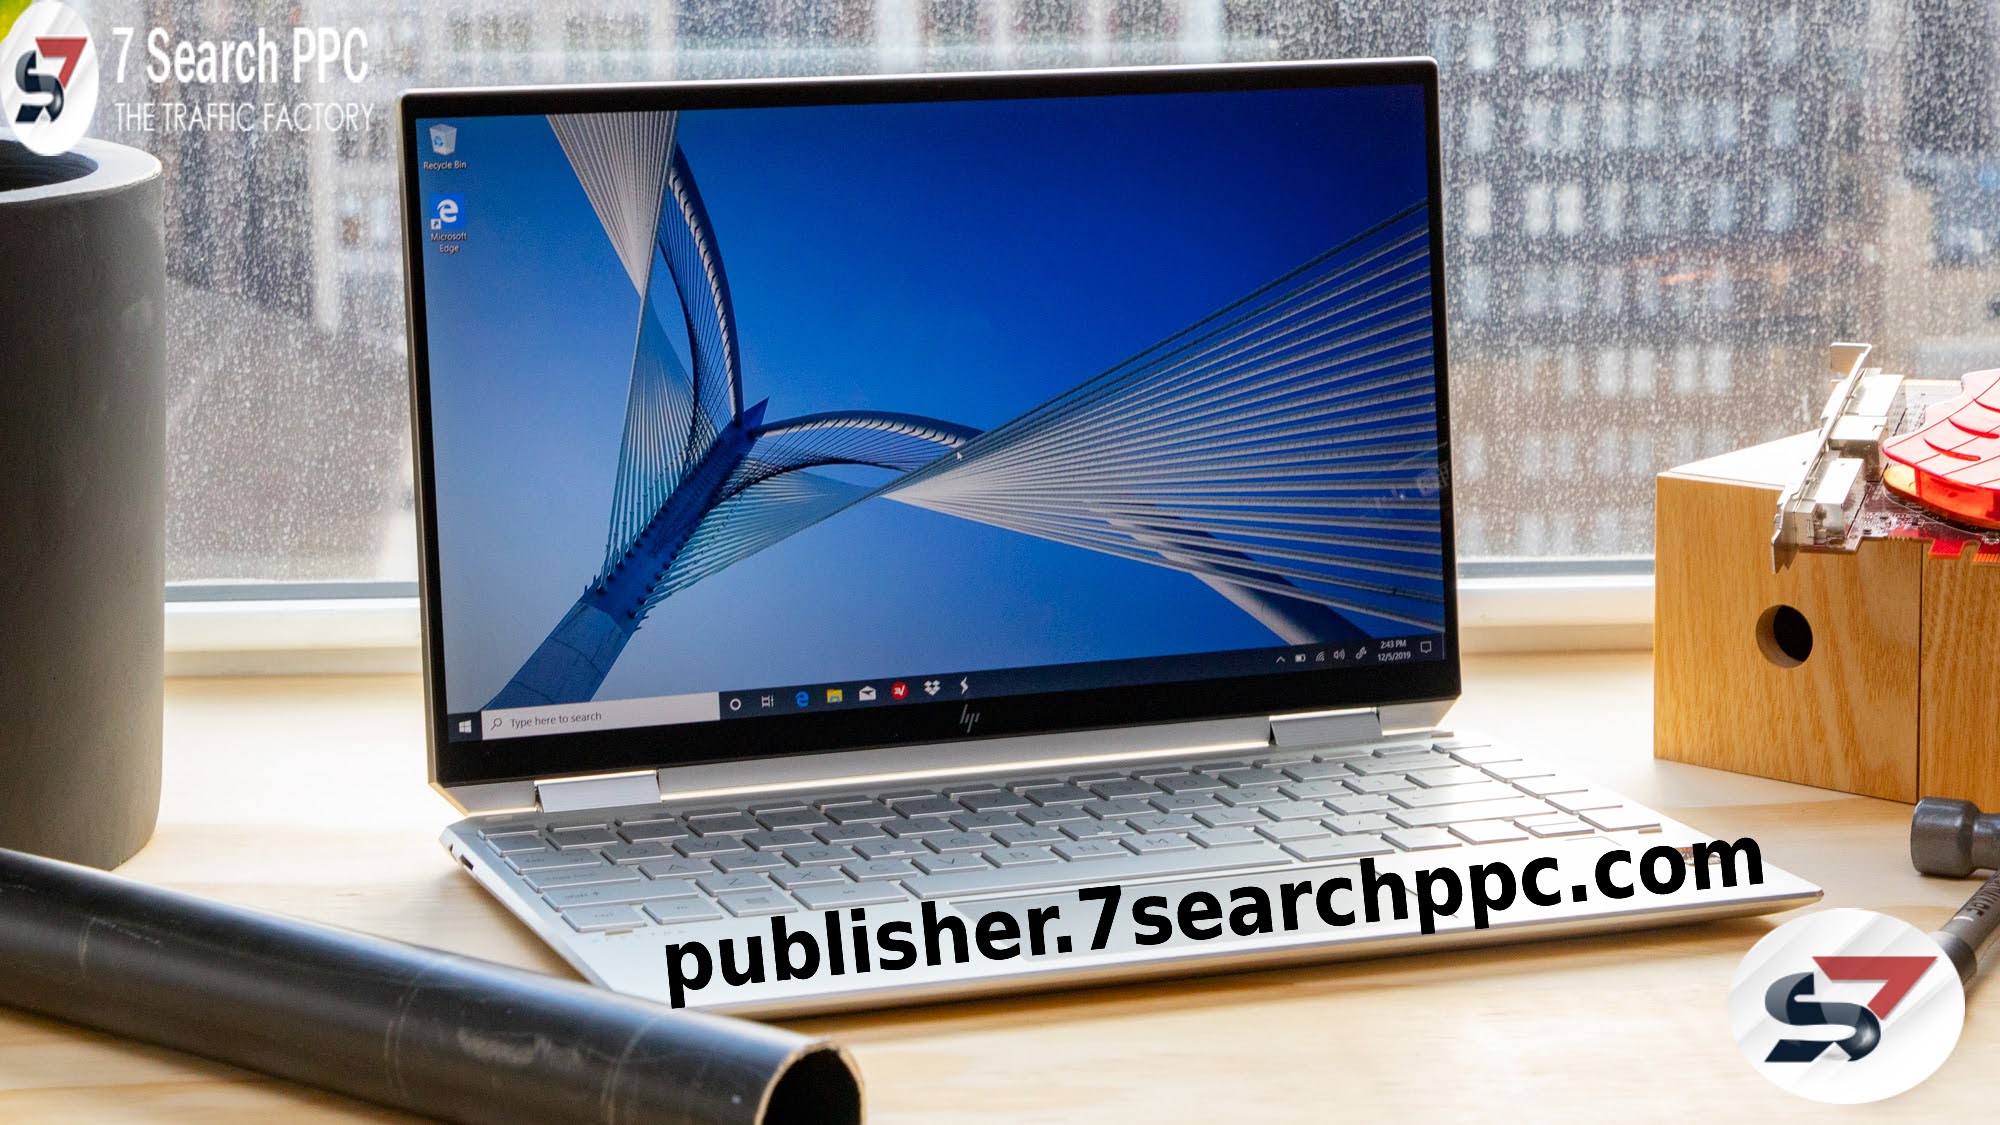 Best PPC Company – 7Search PPC